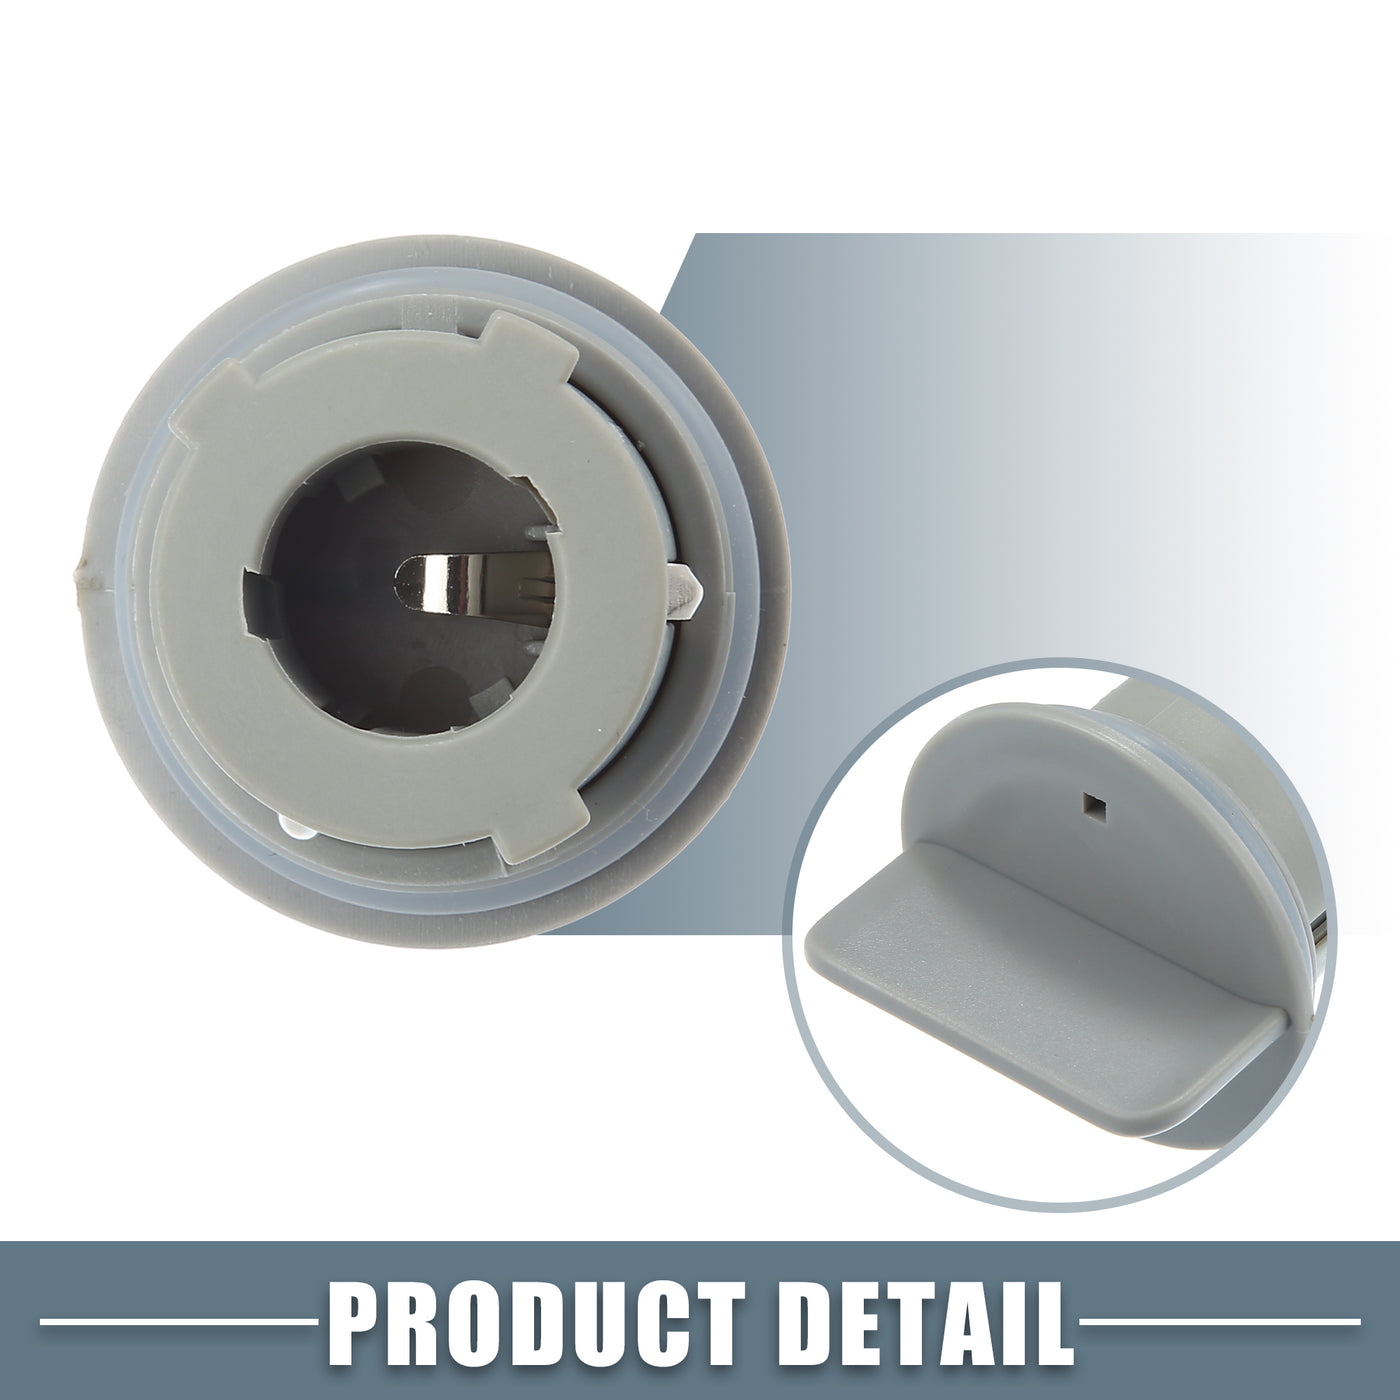 A ABSOPRO Side Indicator Turn Signal Light Bulb Socket Holder 63117159570 for BMW 325i 325xi 328i 330i 330xi 335i E46 E90 2006-2008 (Set of 2)